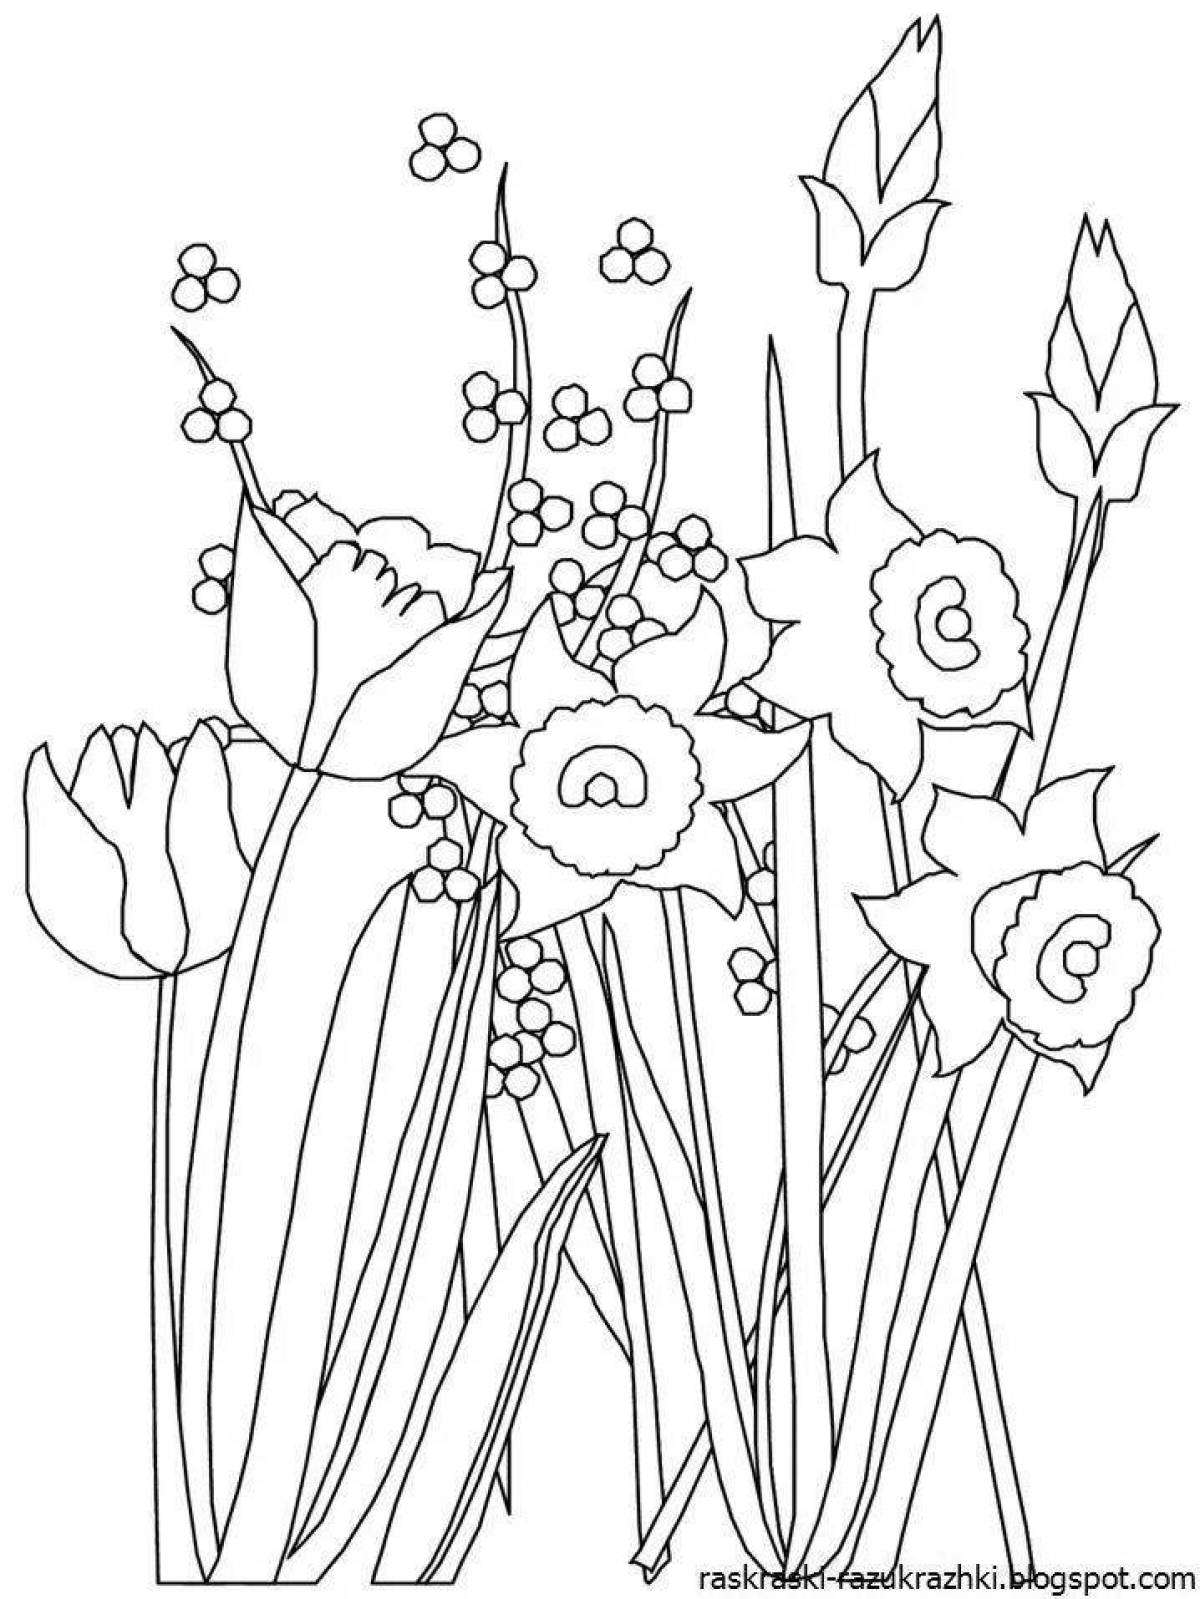 Coloring page joyful spring flowers